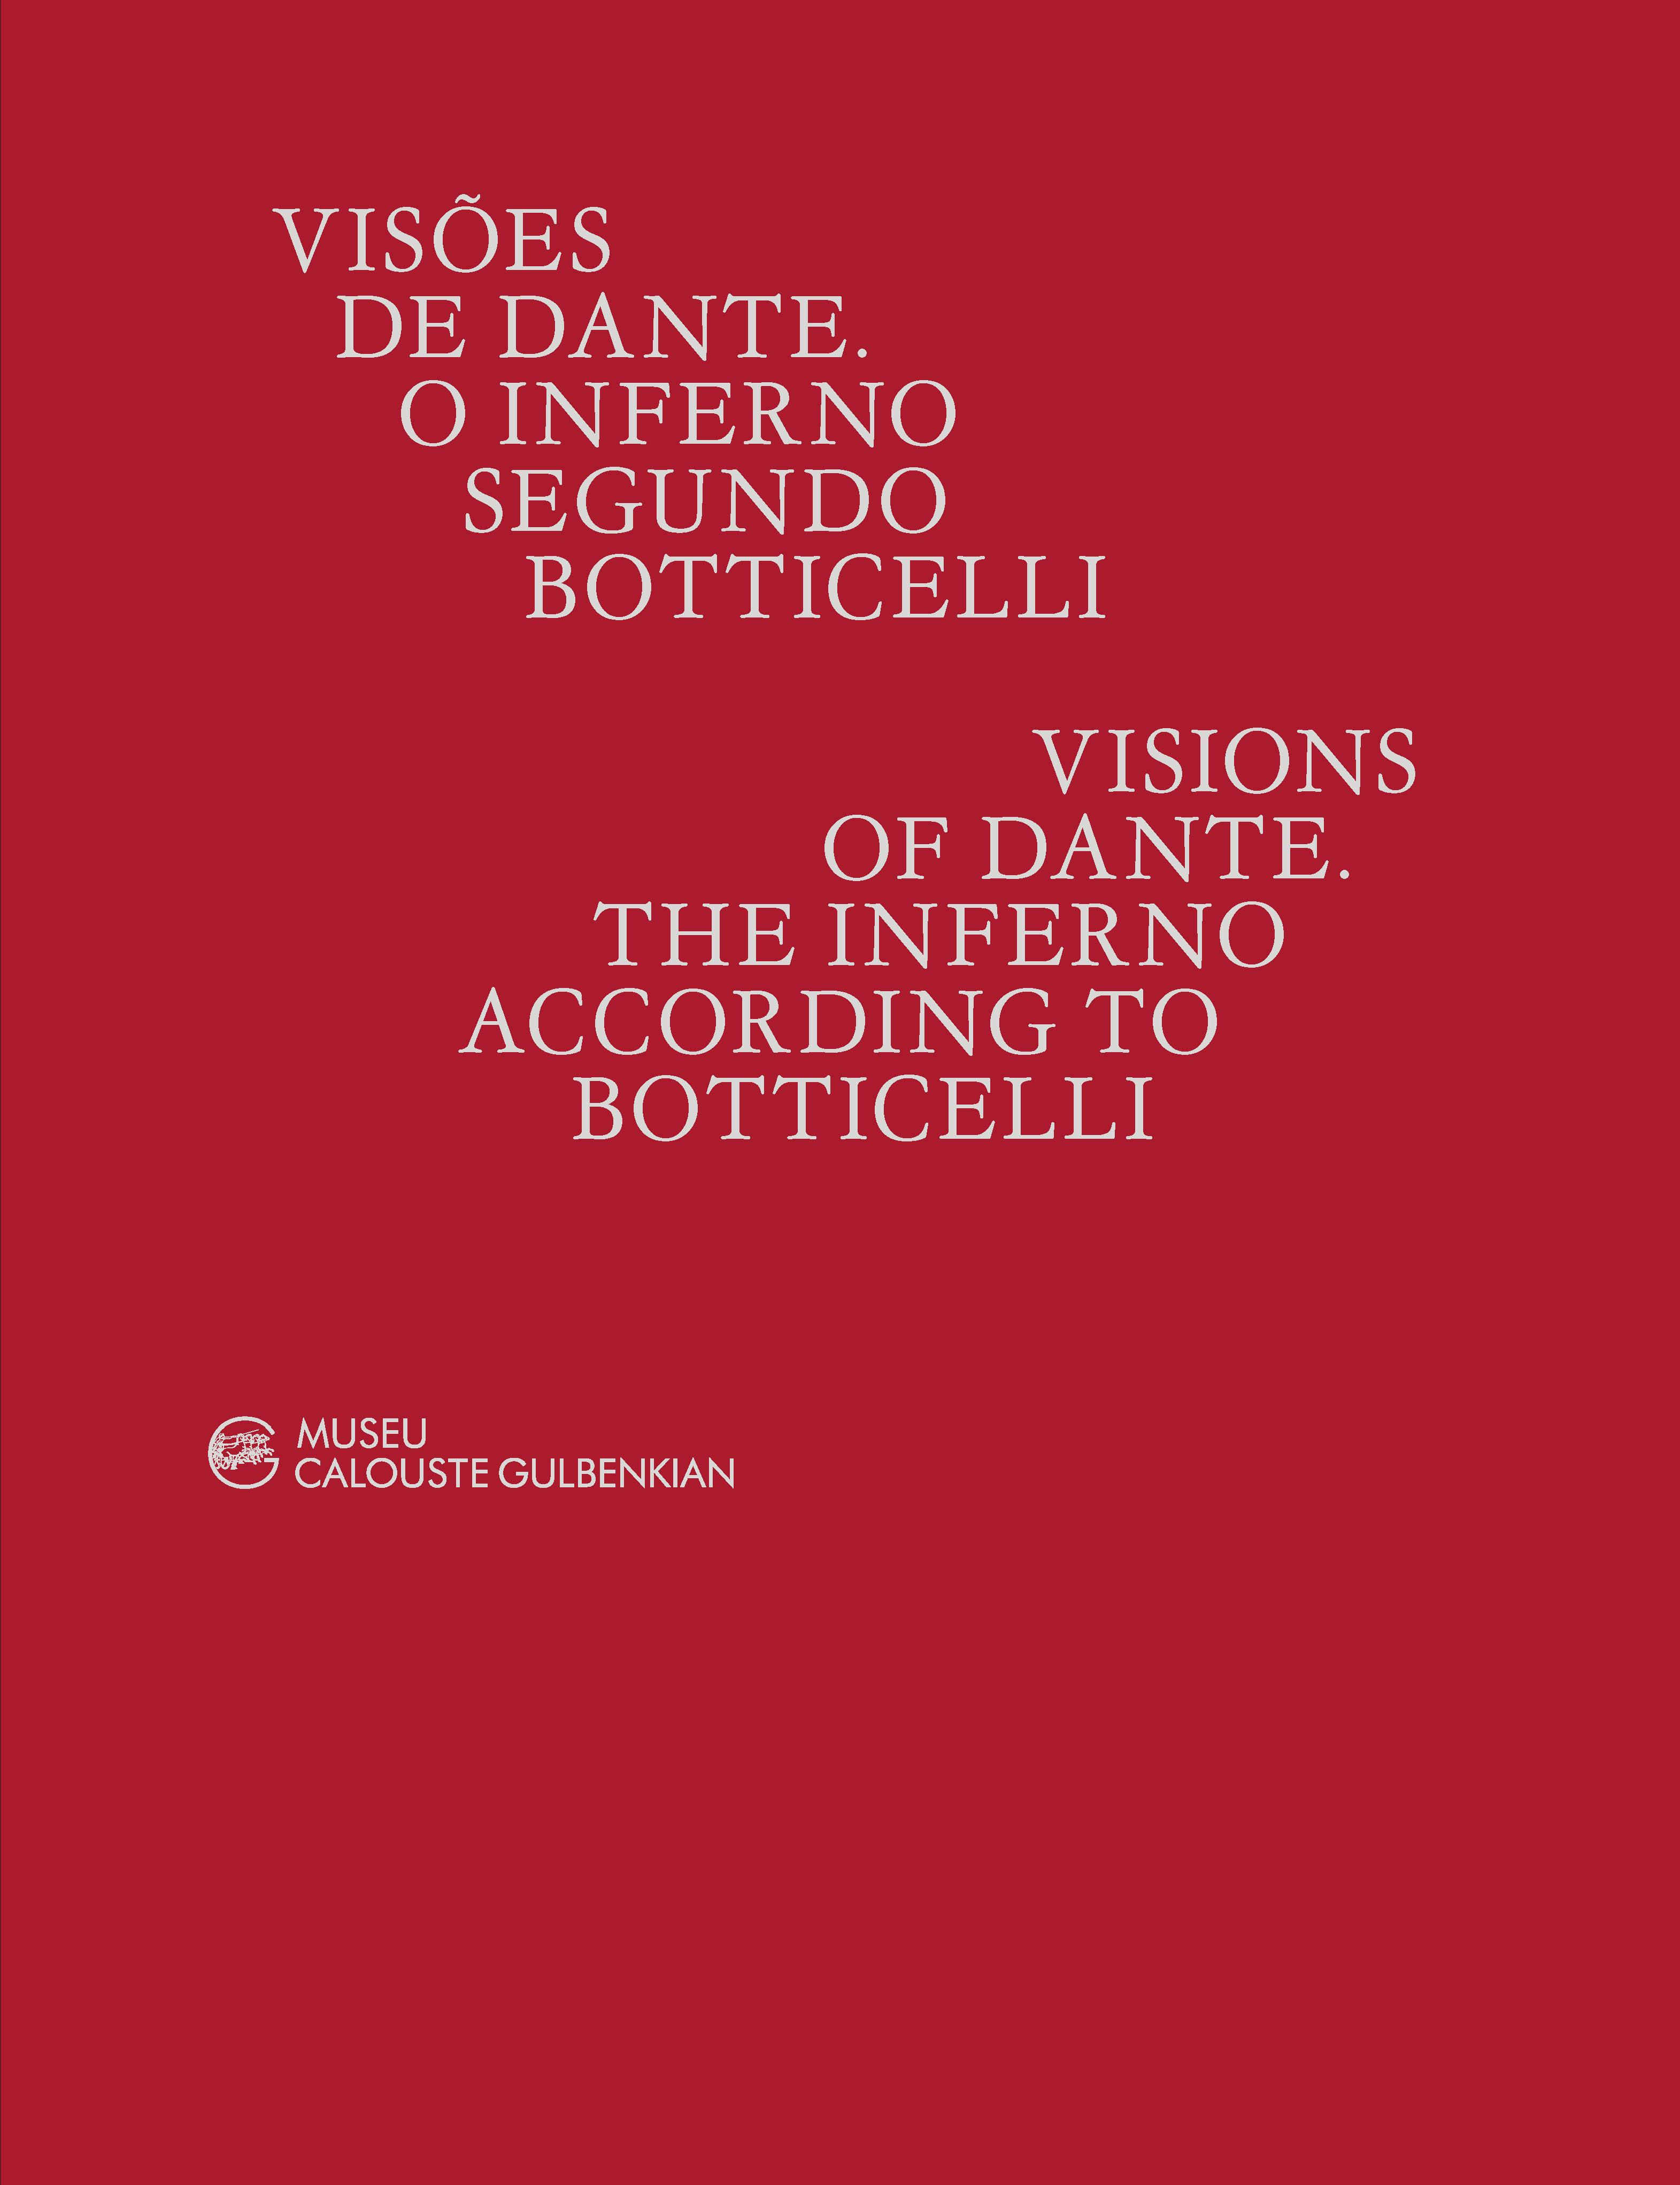 Visões de Dante. O Inferno segundo Botticelli / Visions of Dante. The Inferno according to Botticelli